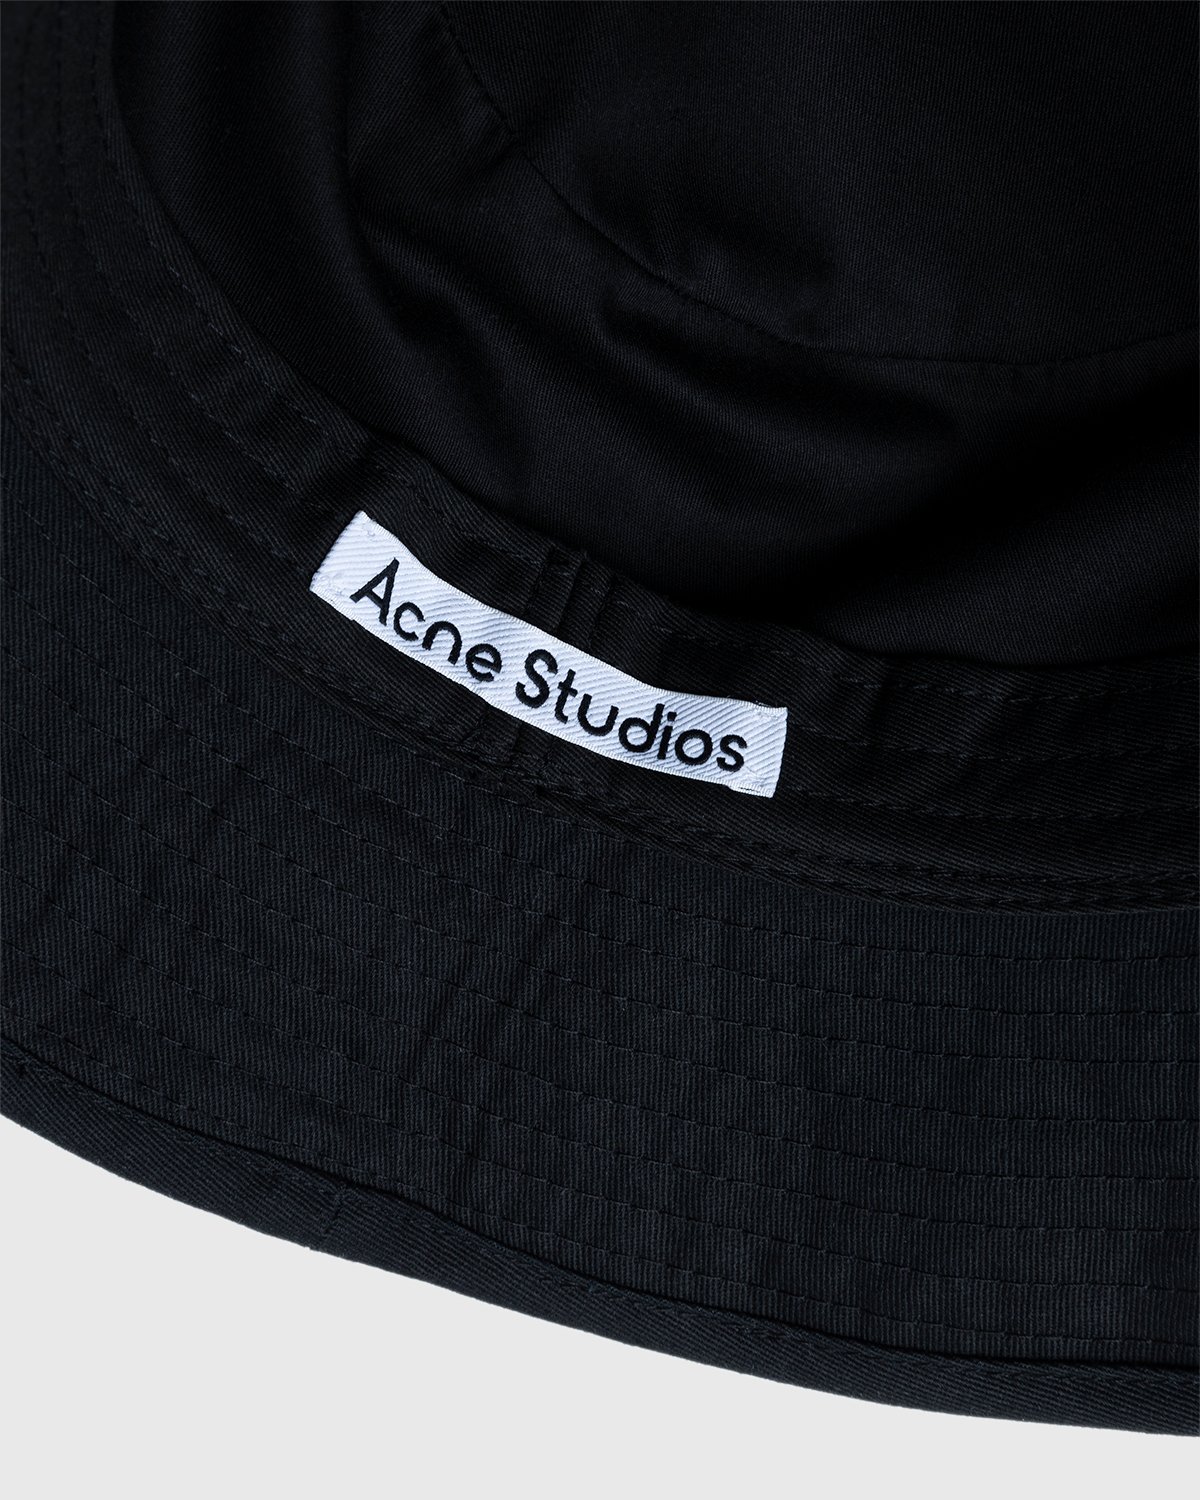 Acne Studios - Twill Bucket Hat Black - Accessories - Black - Image 4